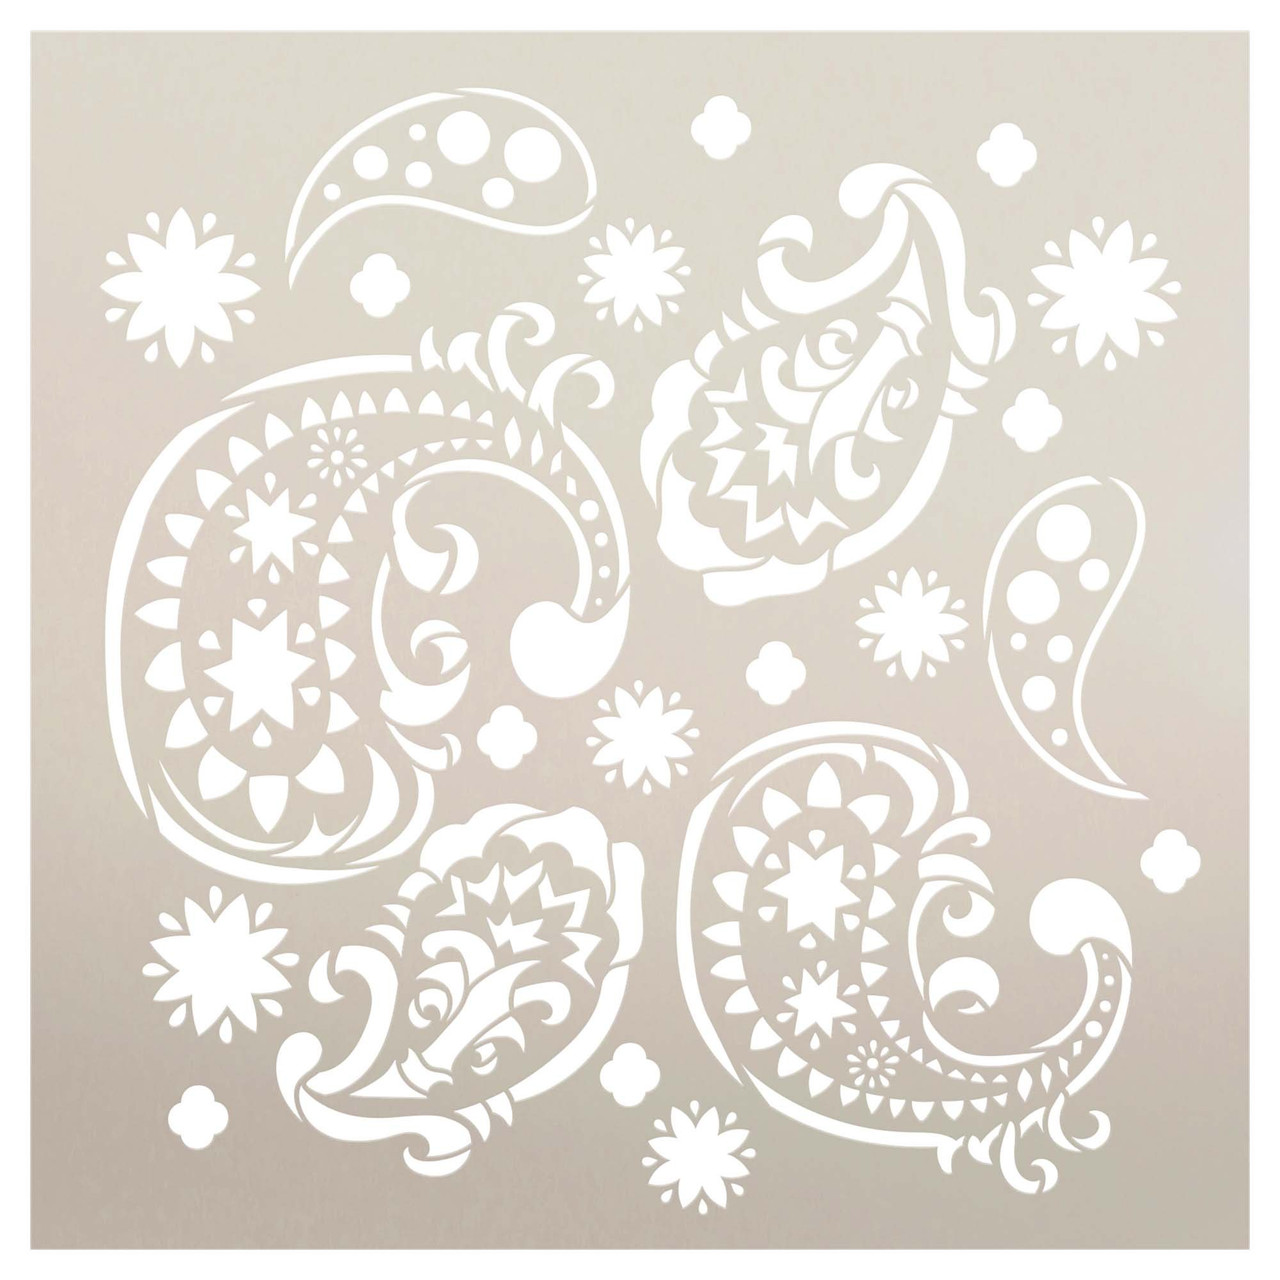 Star & Swirl Paisley Stencil by StudioR12 | Craft DIY Backsplash Home Decor | Paint Pattern Wood Sign | Reusable Mylar Template | Select Size